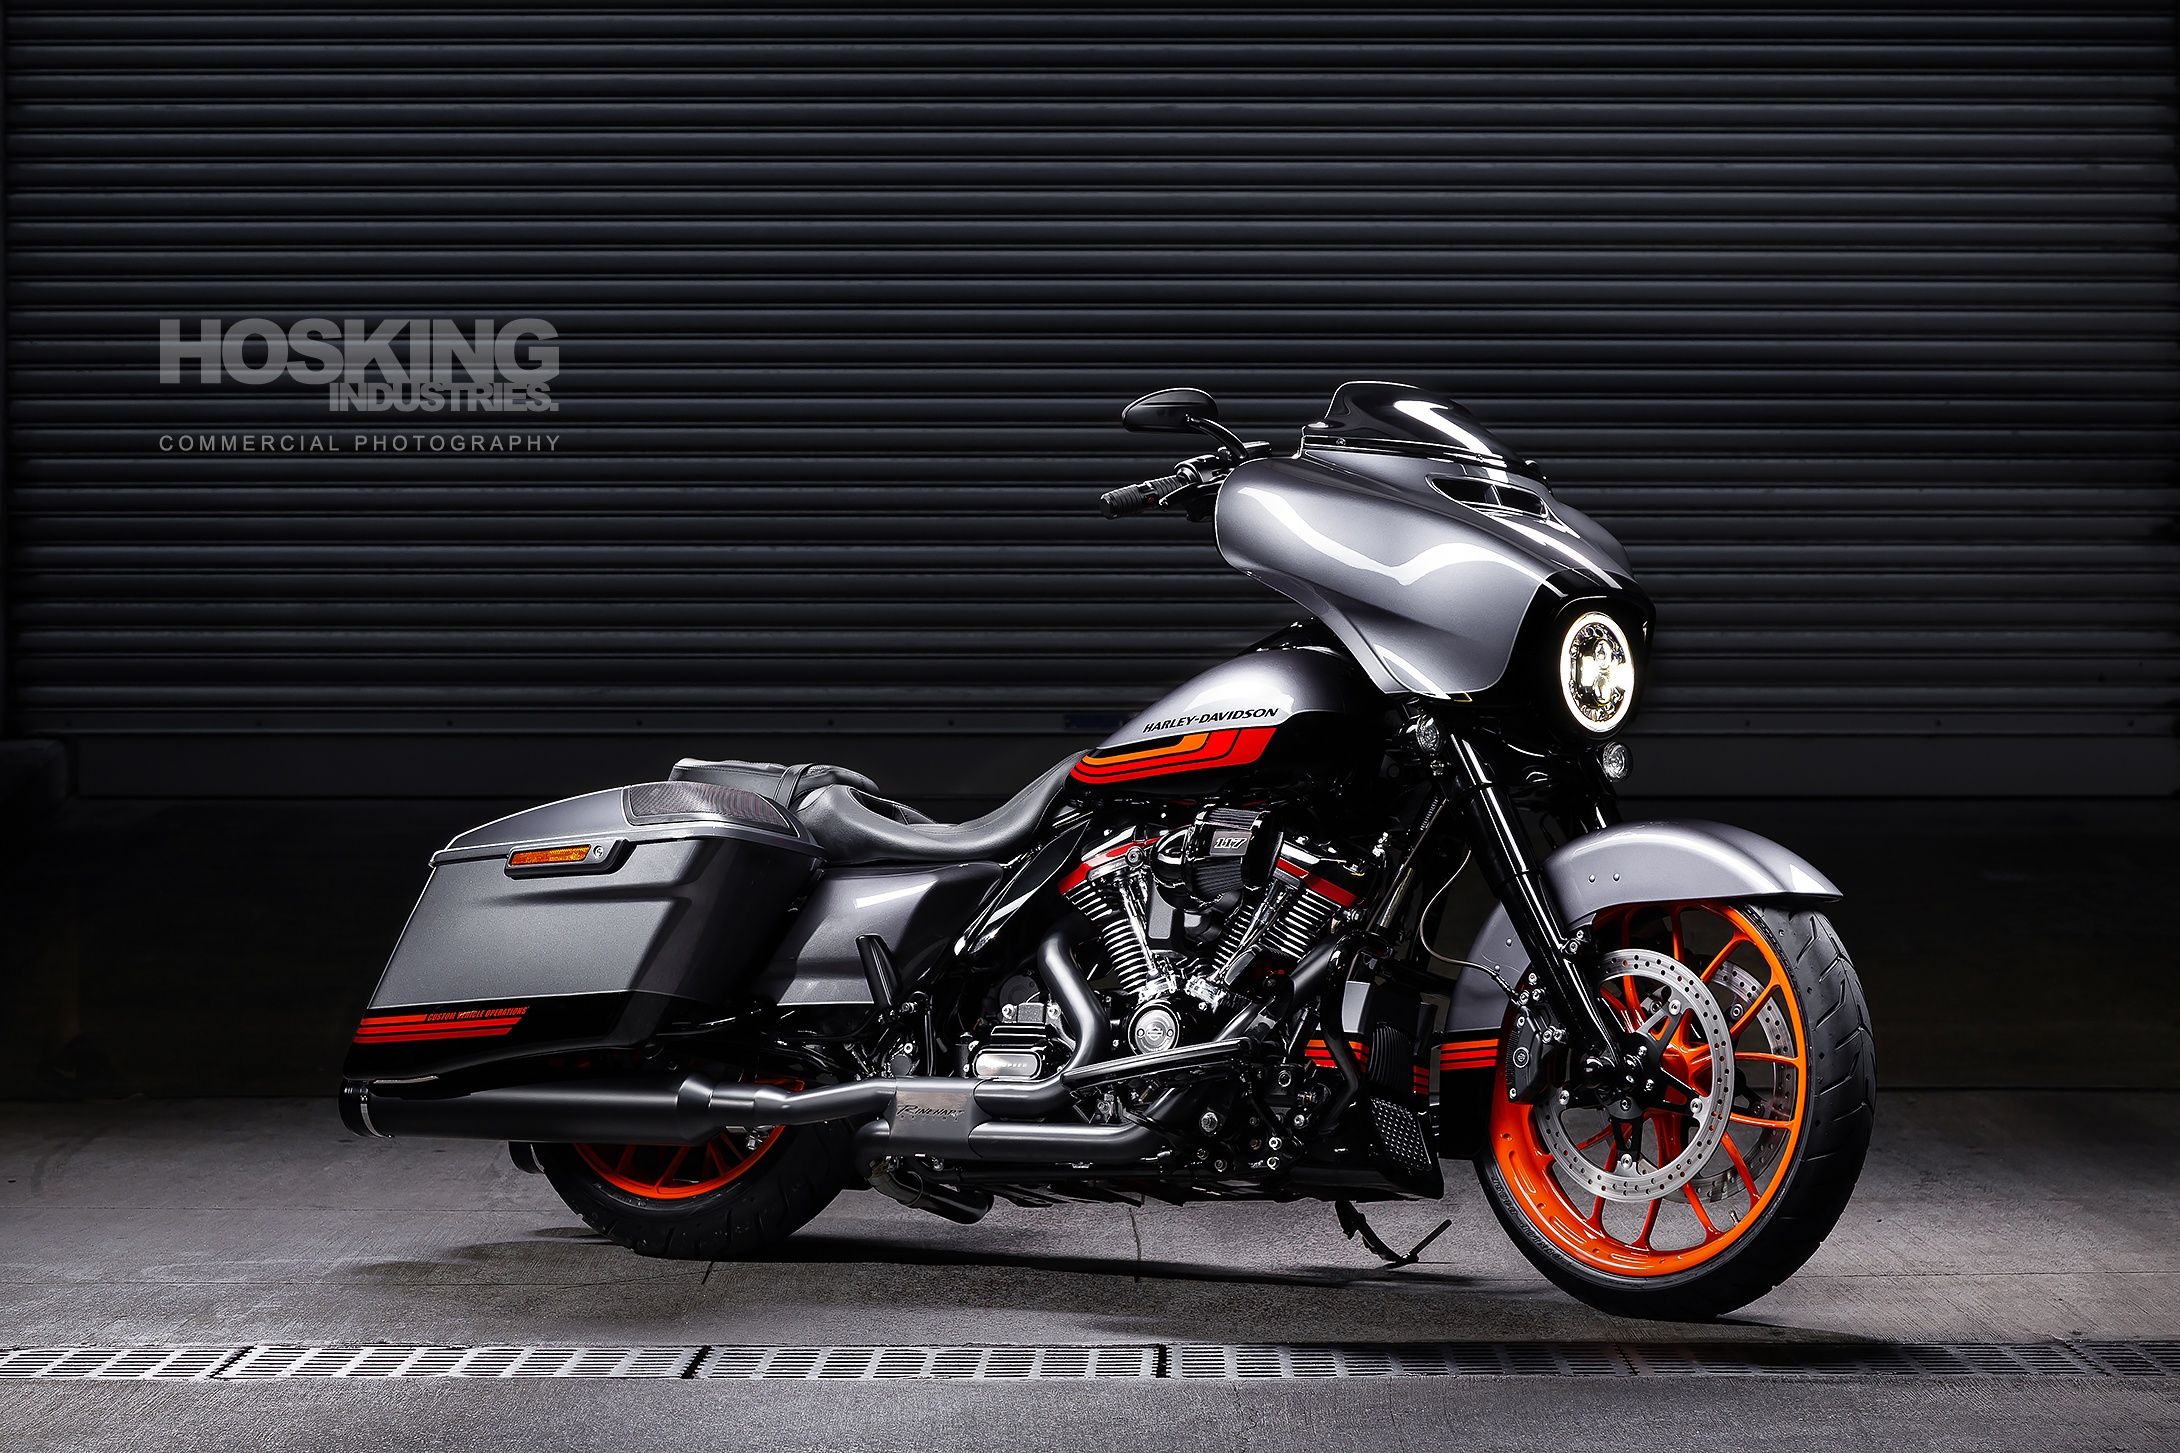 Harley Davidson bagger style motorcycle